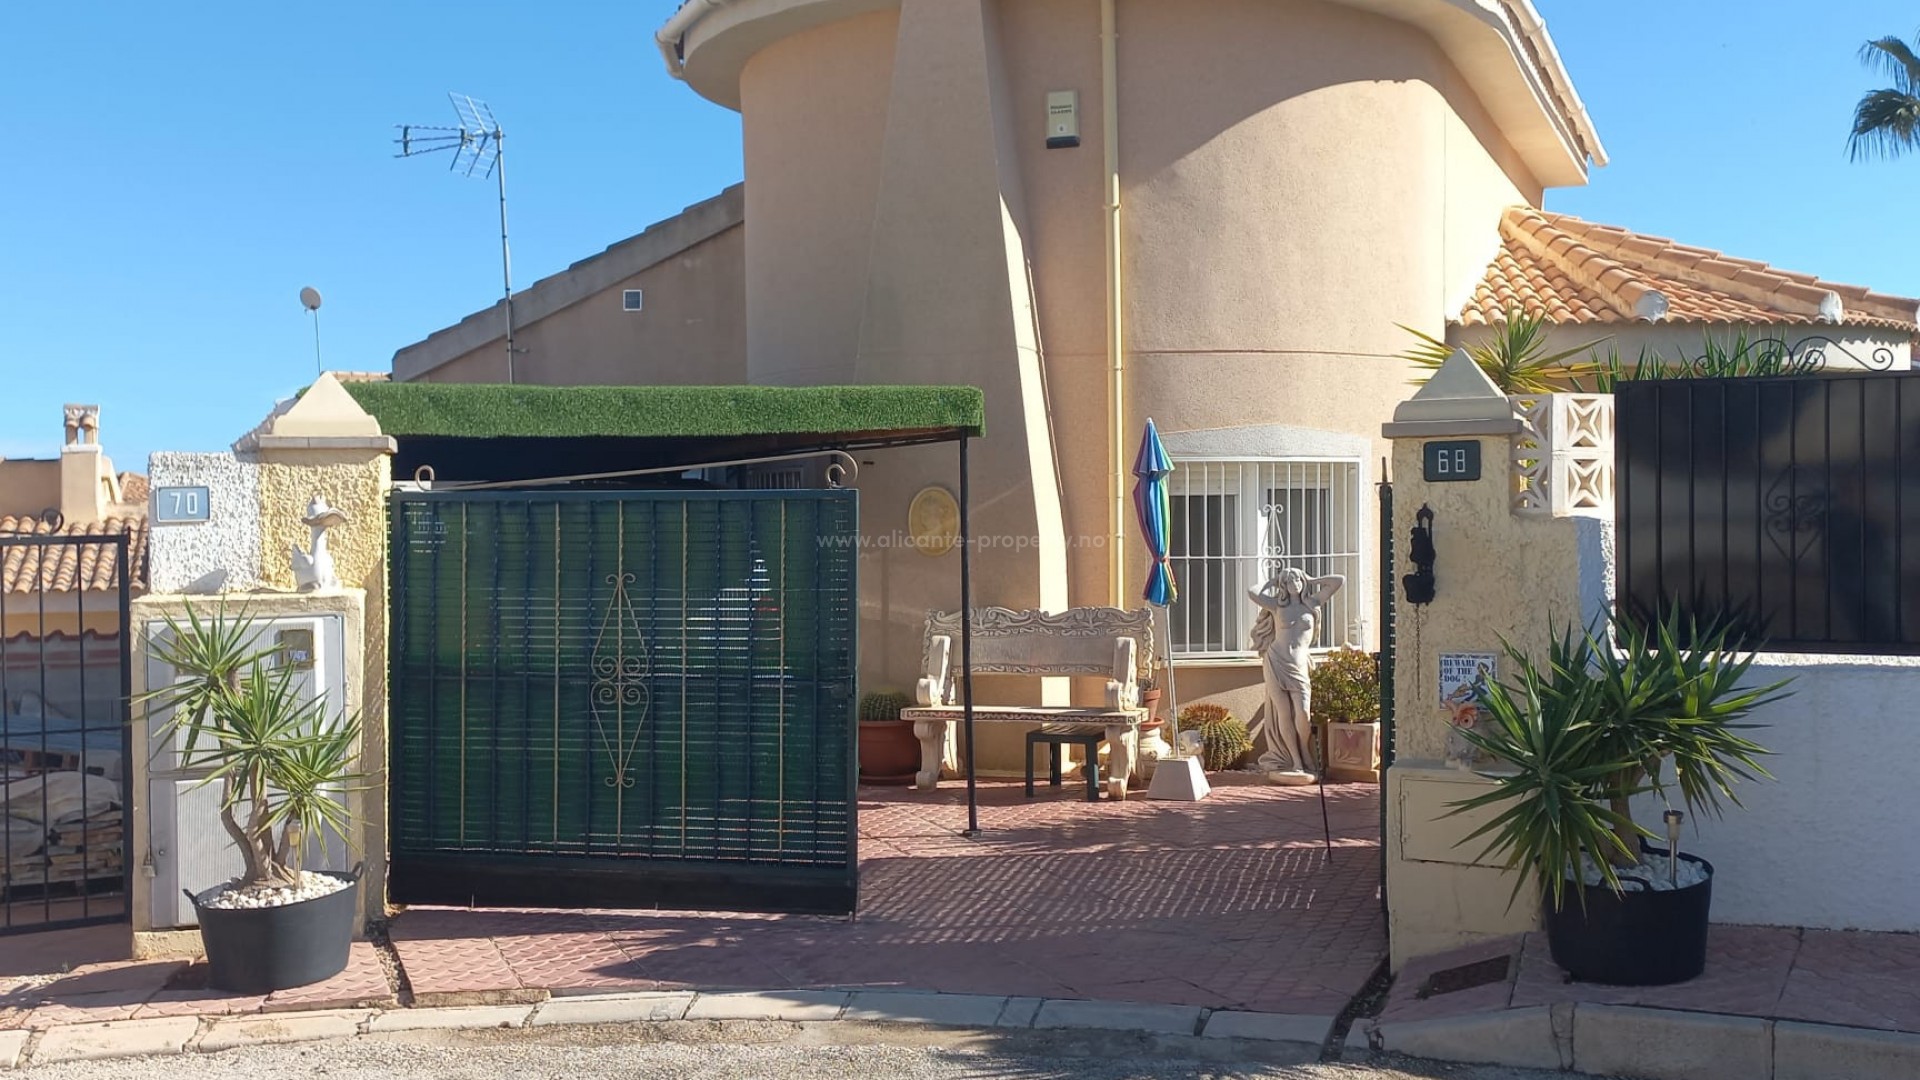 Equity release bolig/hus/villa i Quesada, Rojales, Alicante, 4 soverom, 2 bad, privat hage med boblebad, felles basseng, nær flere golfbaner